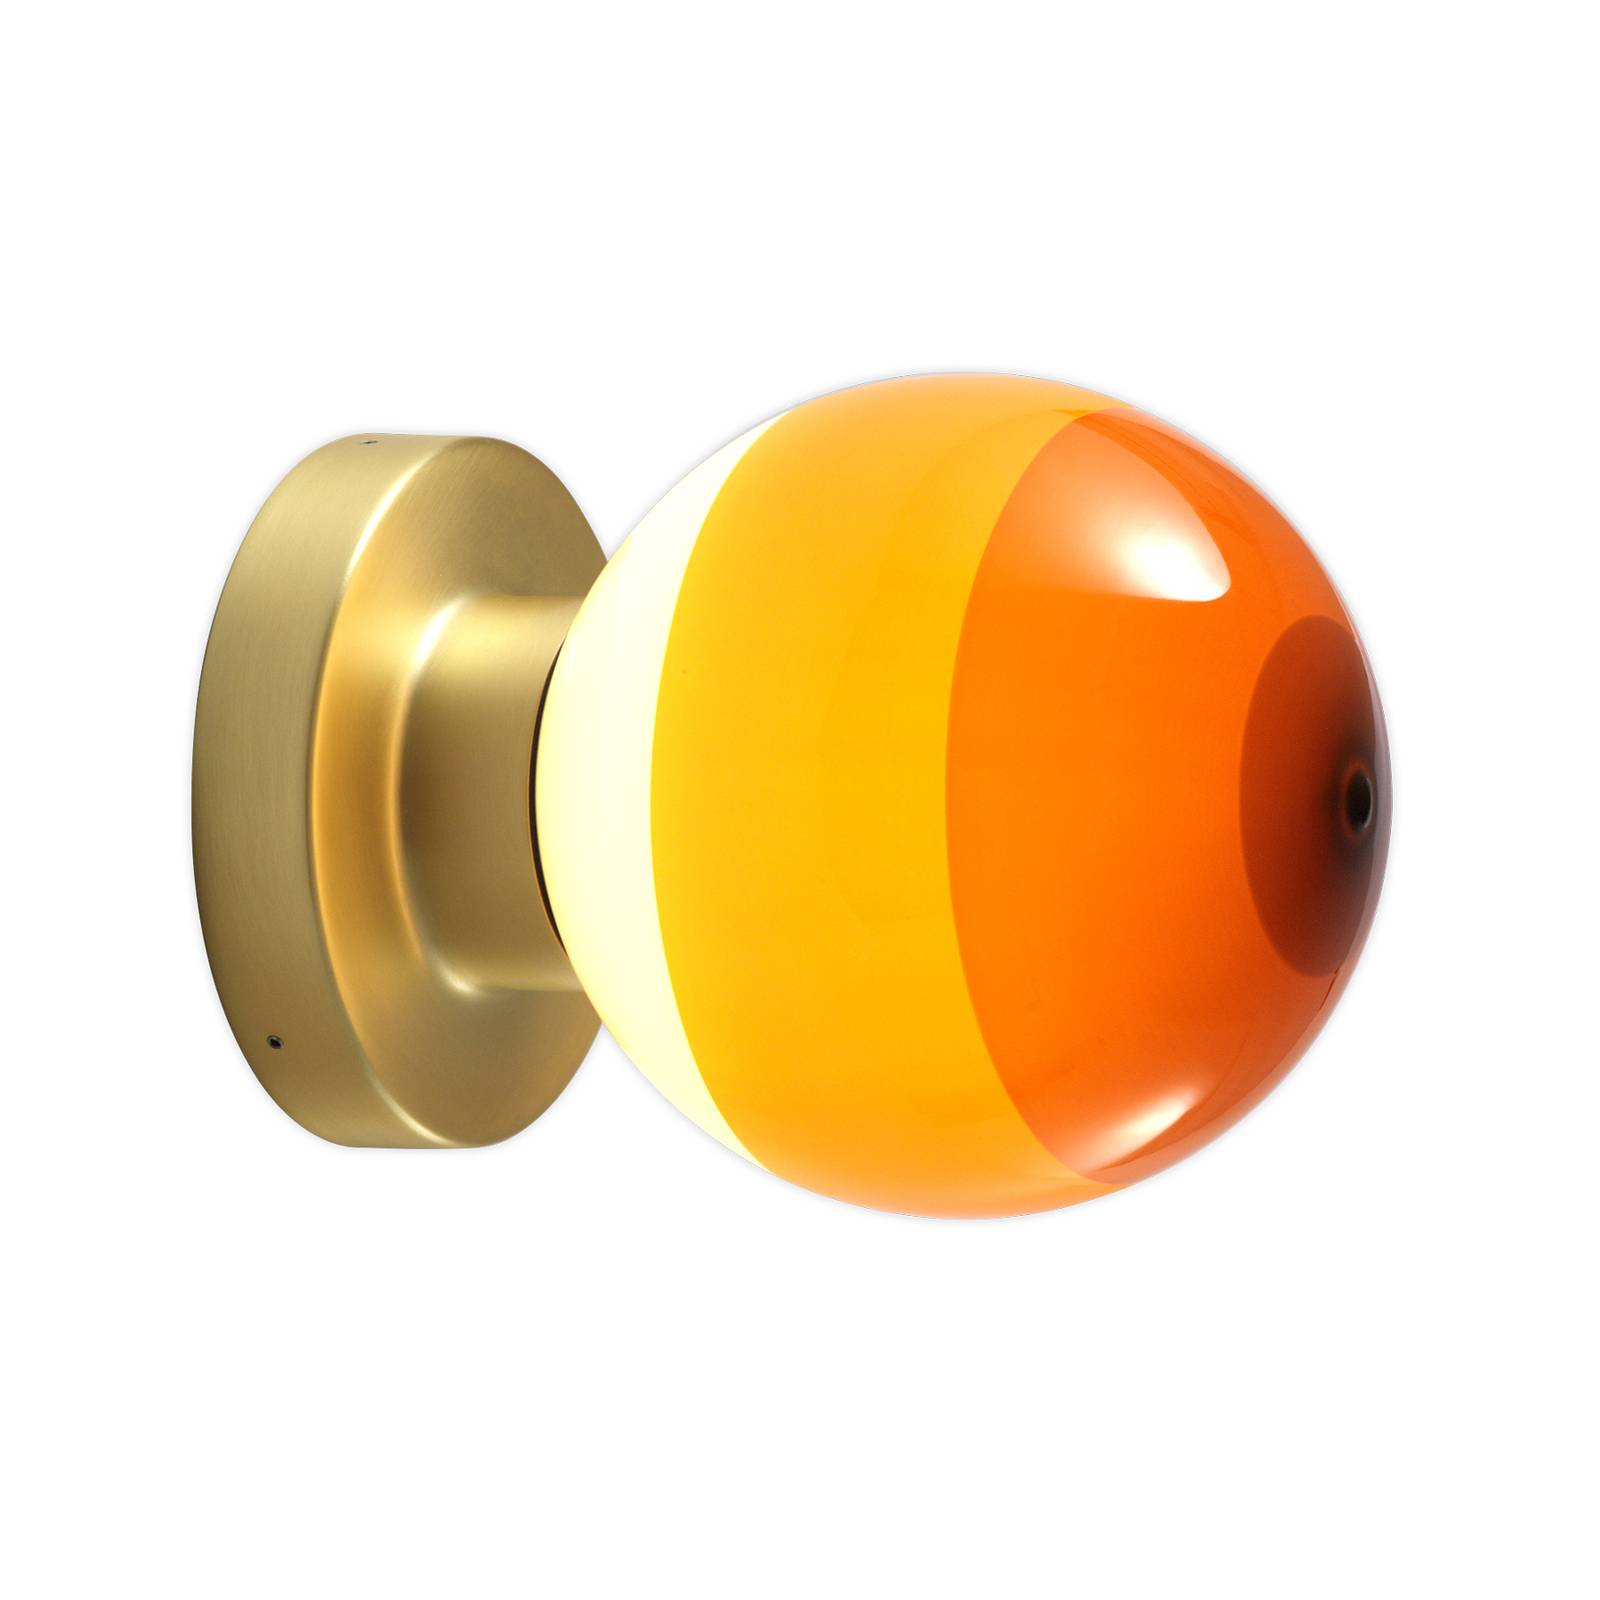 MARSET Dipping Light A2 LED-Wandlampe, orange/gold